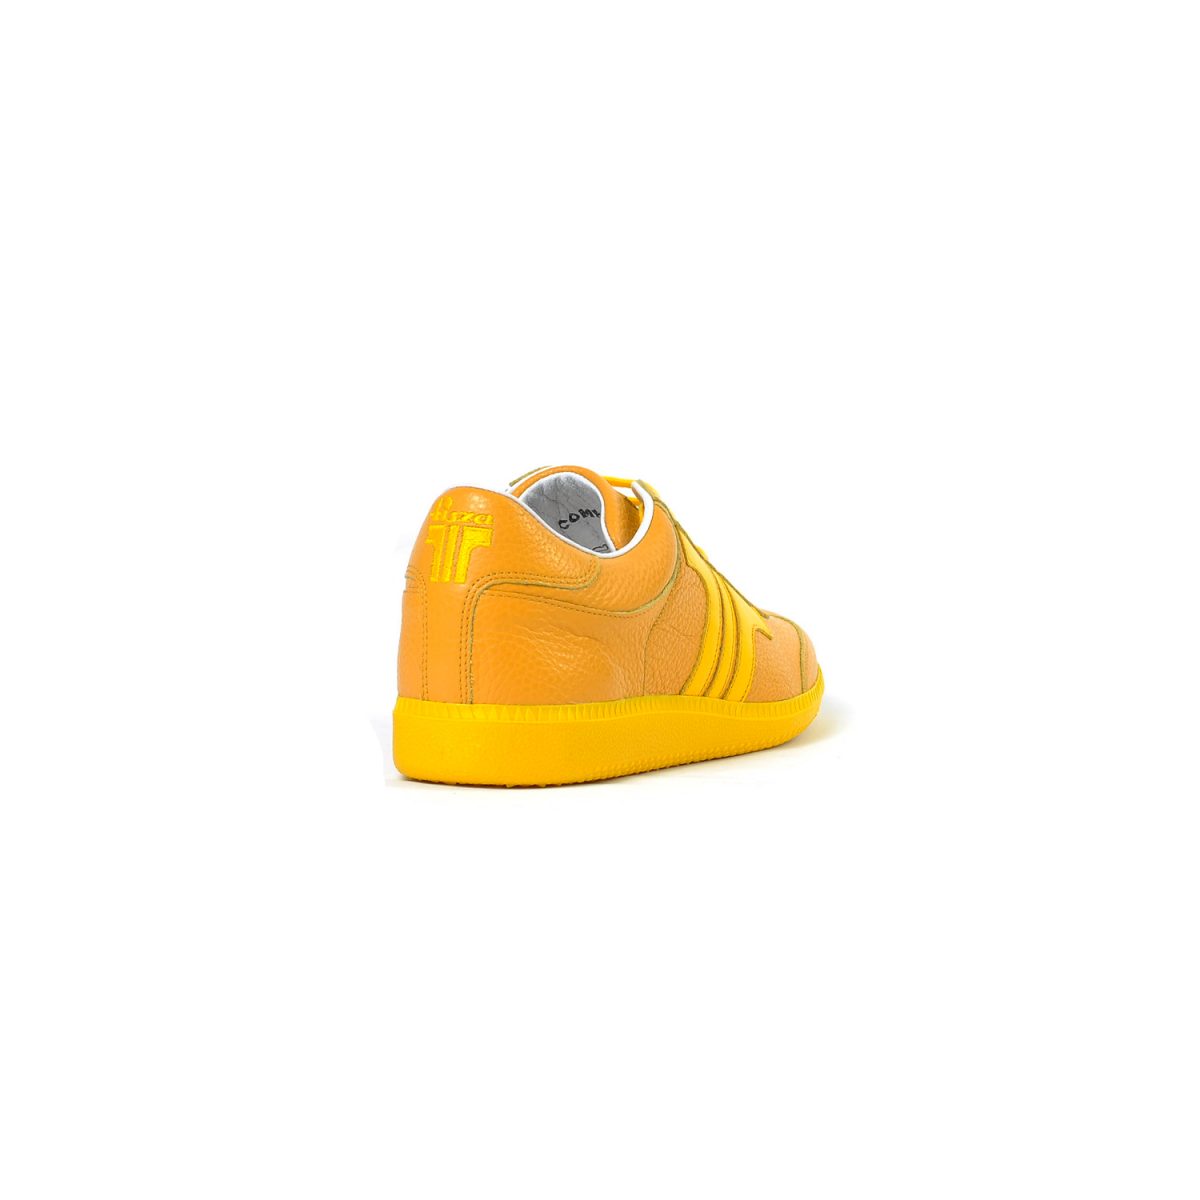 Tisza cipő - Compakt - Sárga